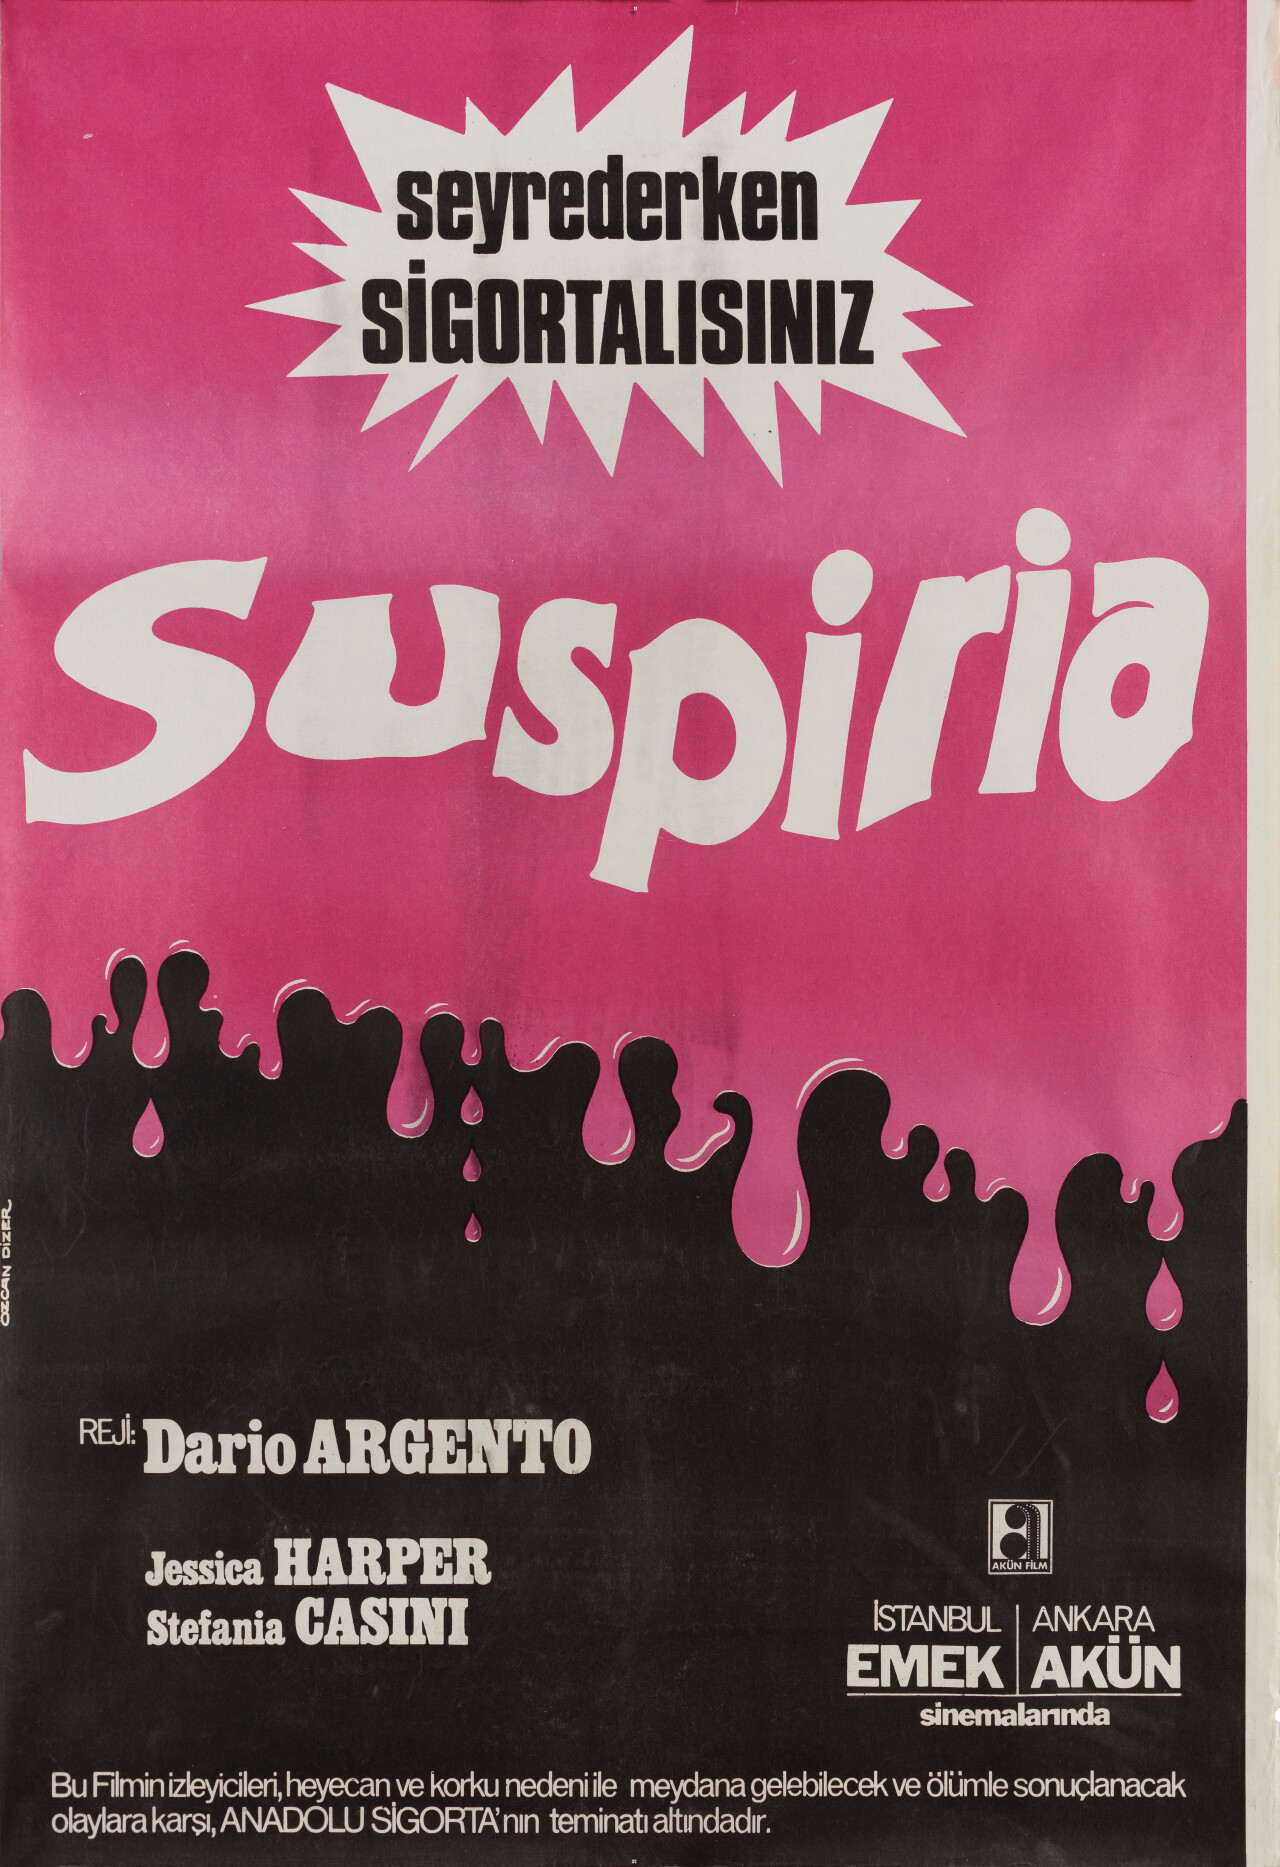 Суспирия (Suspiria, 1977), режиссёр Дарио Ардженто, турецкий постер к фильму, автор Озджан Дизер (ужасы, 1977 год)